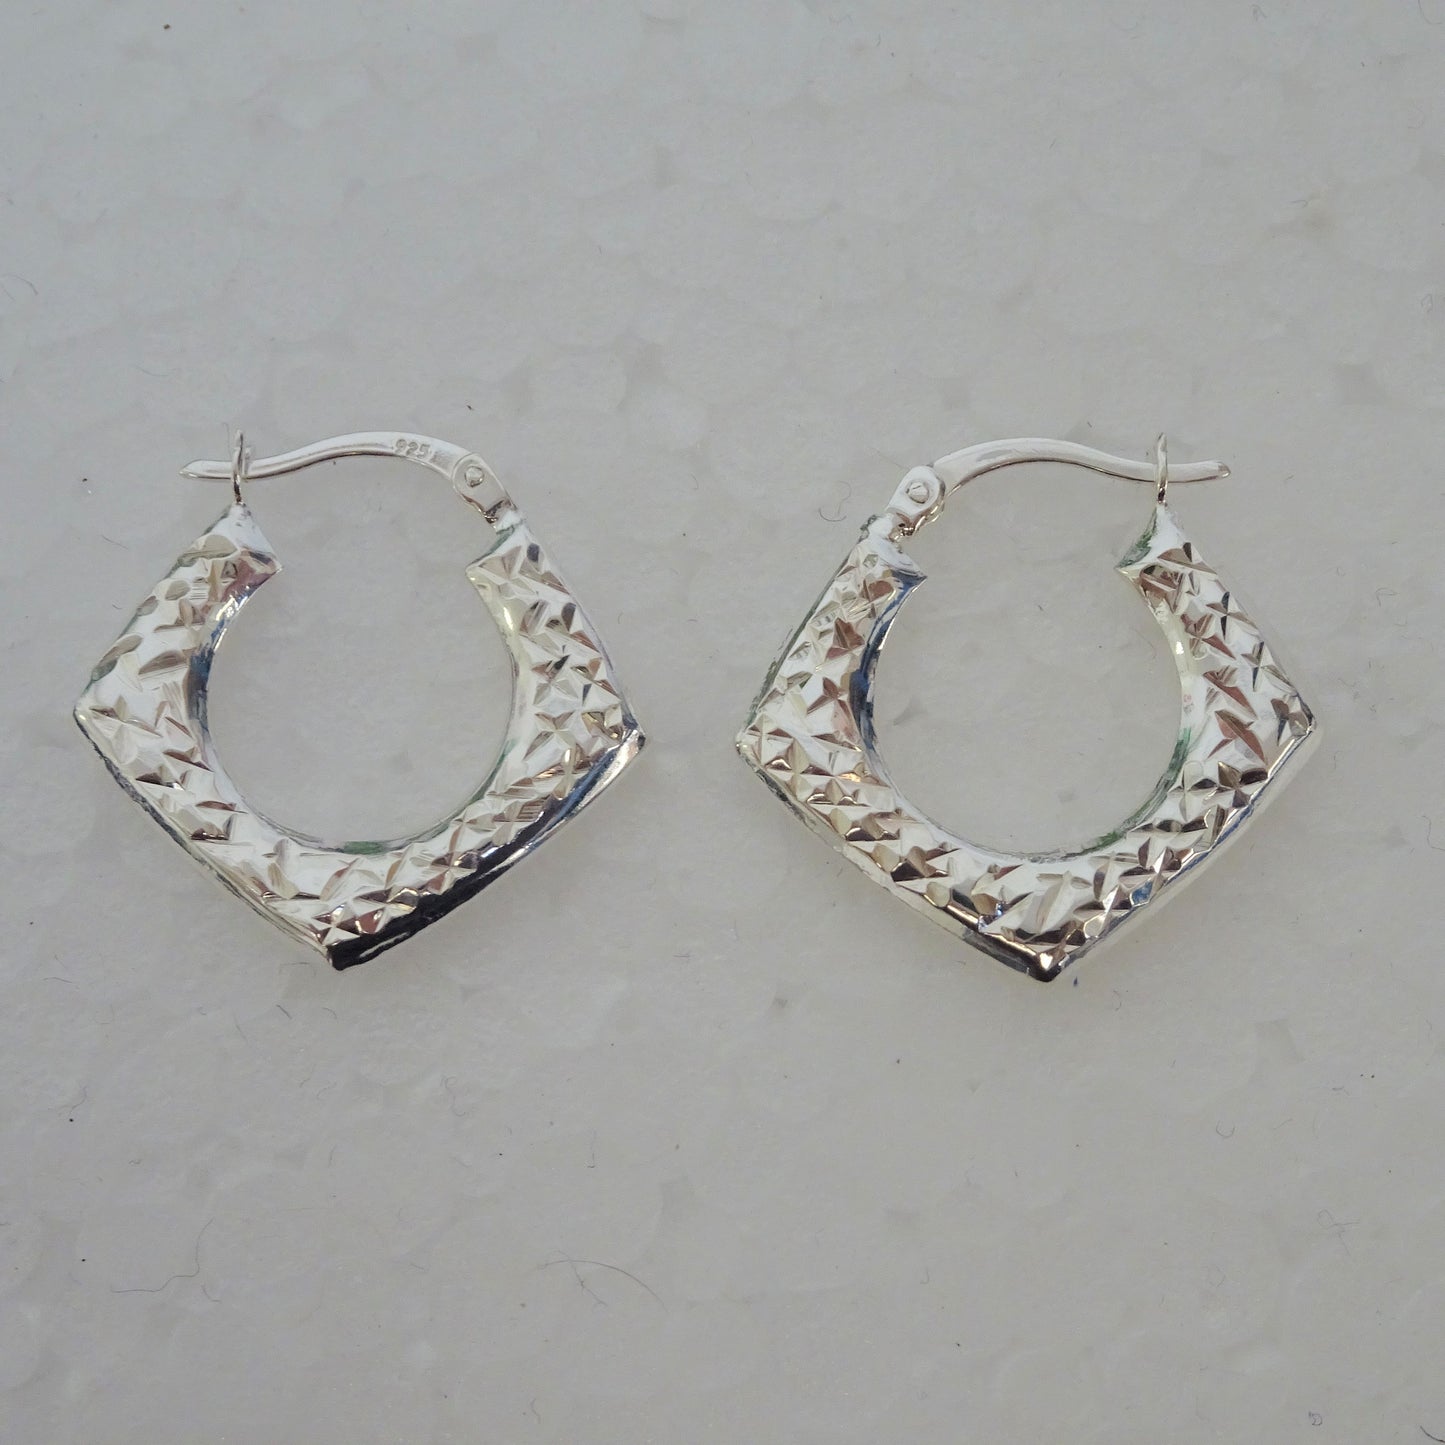 Sterling Silver Diamond Cut Squared Creole Hoop Earrings